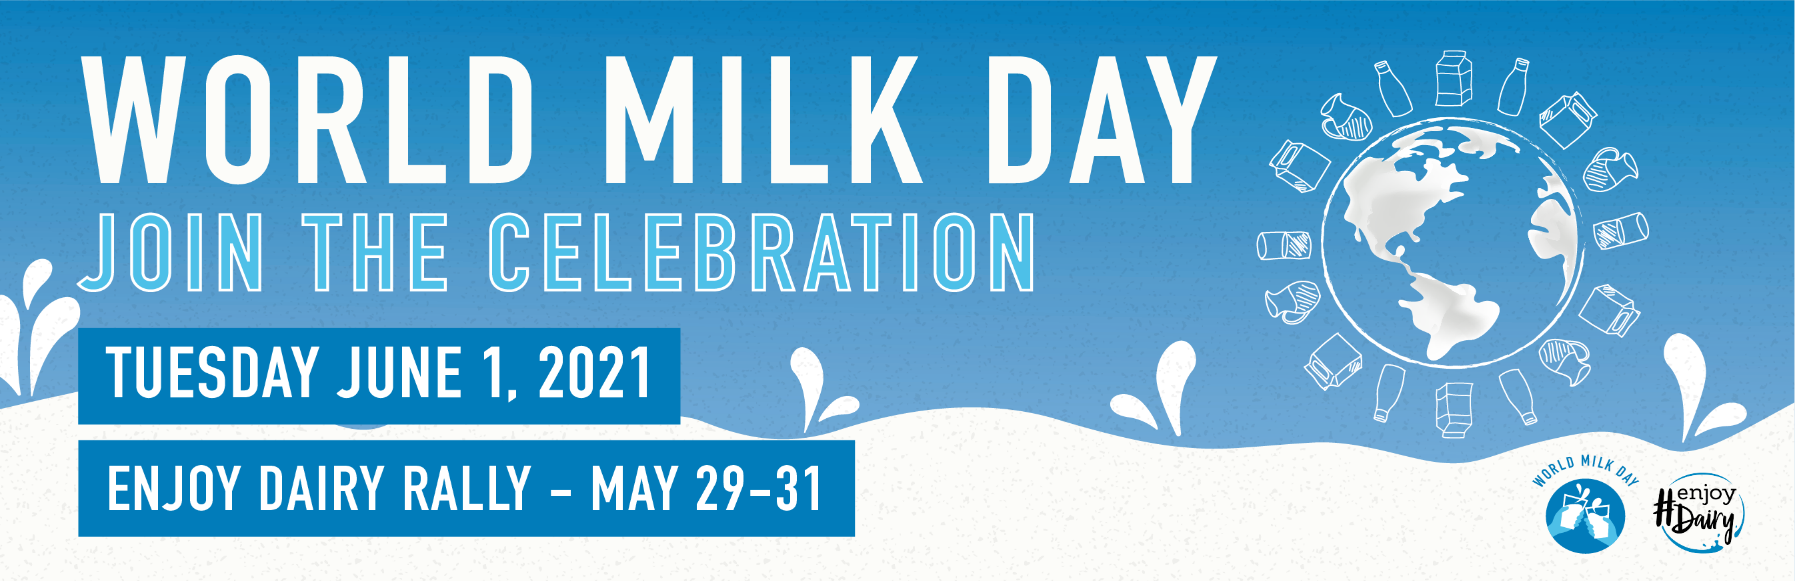 IDF celebrates World Milk Day 2021